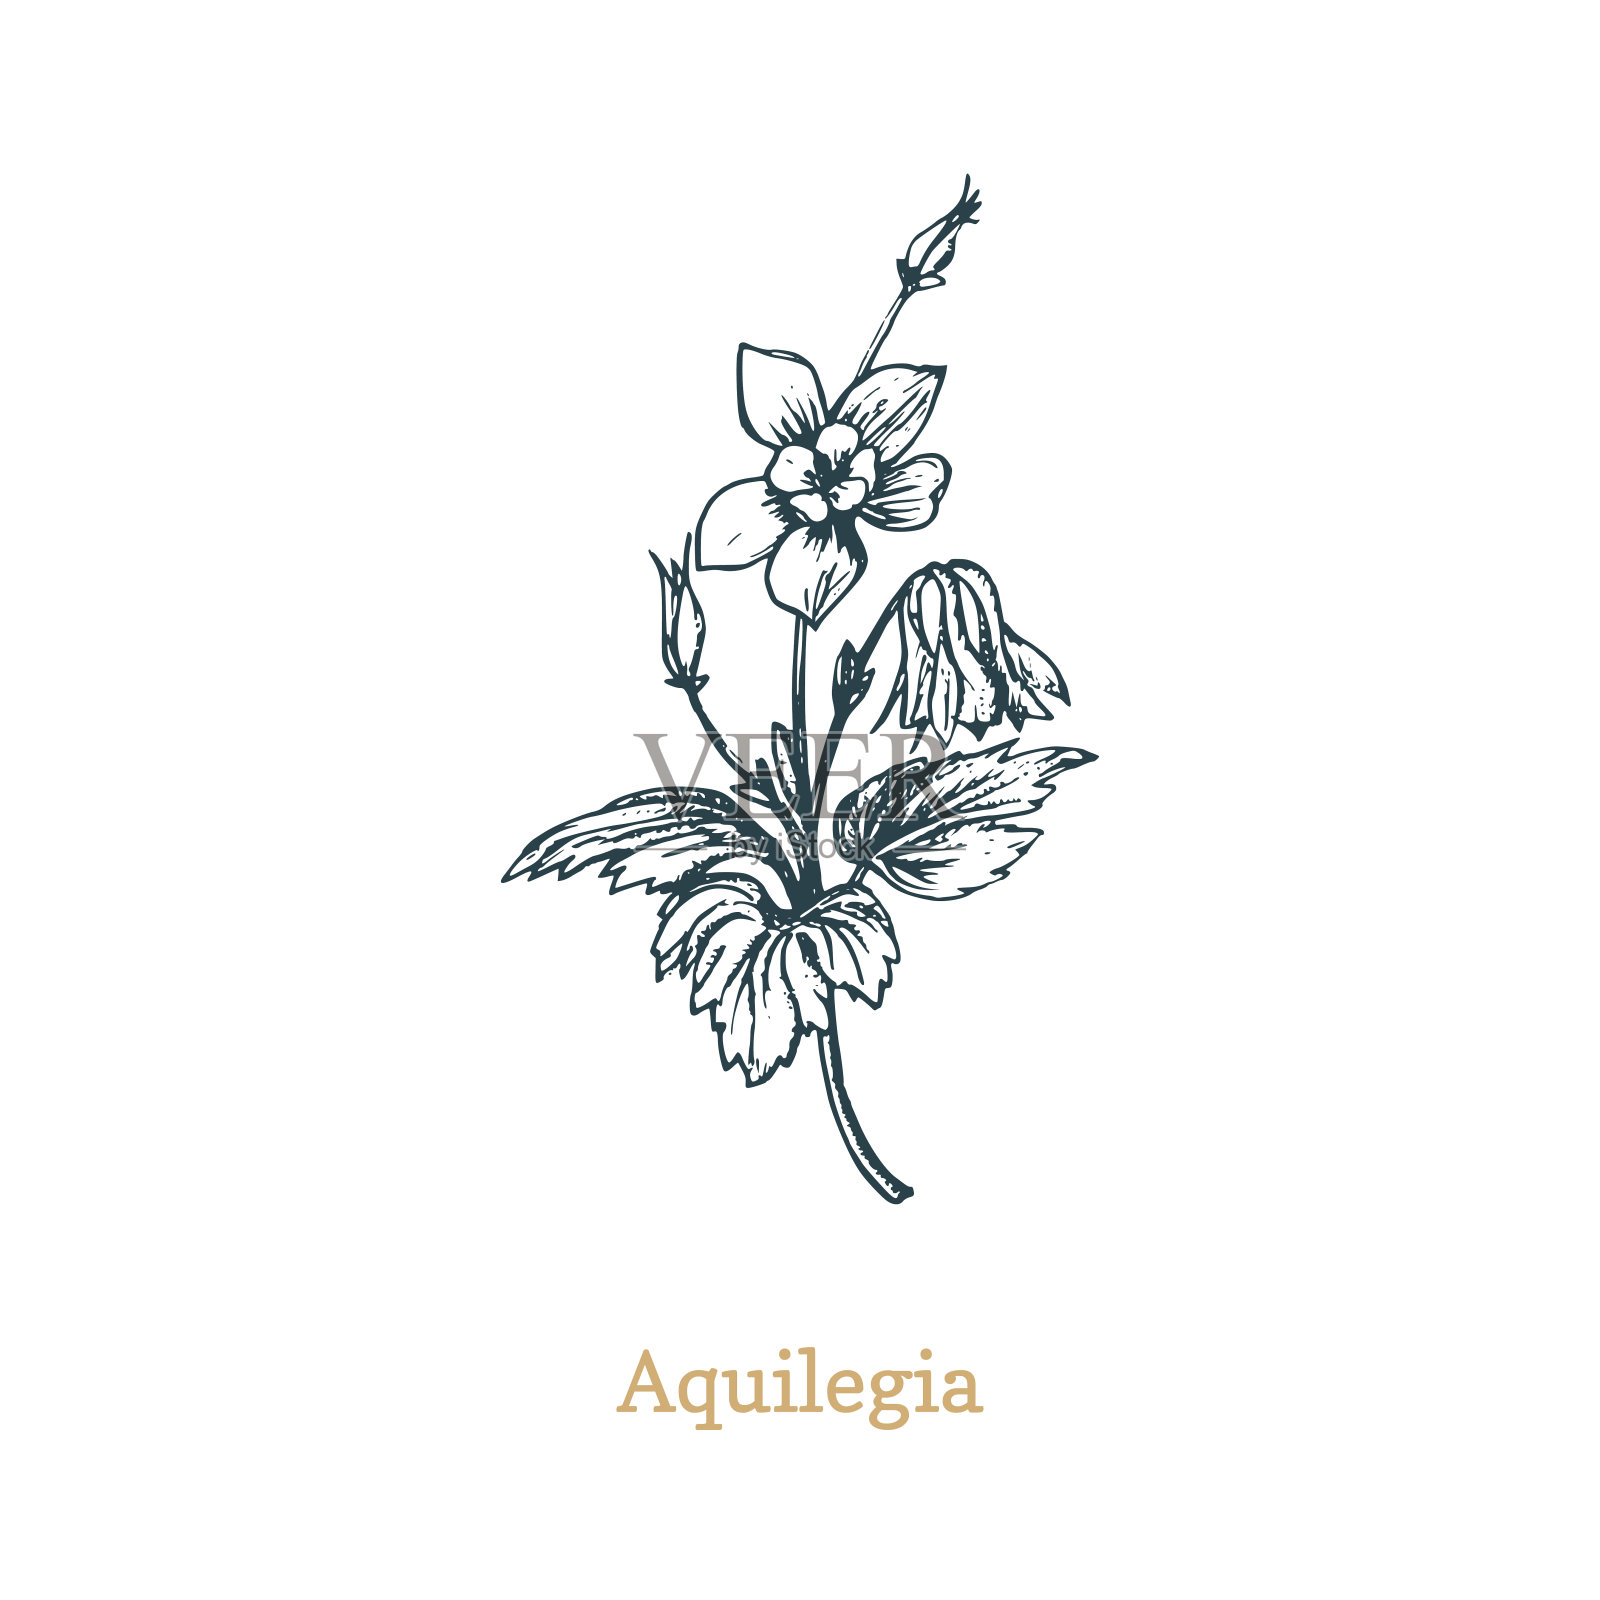 Aqilegia矢量插图。雕刻风格的耧斗菜野花手绘素描。植物工厂孤立。插画图片素材